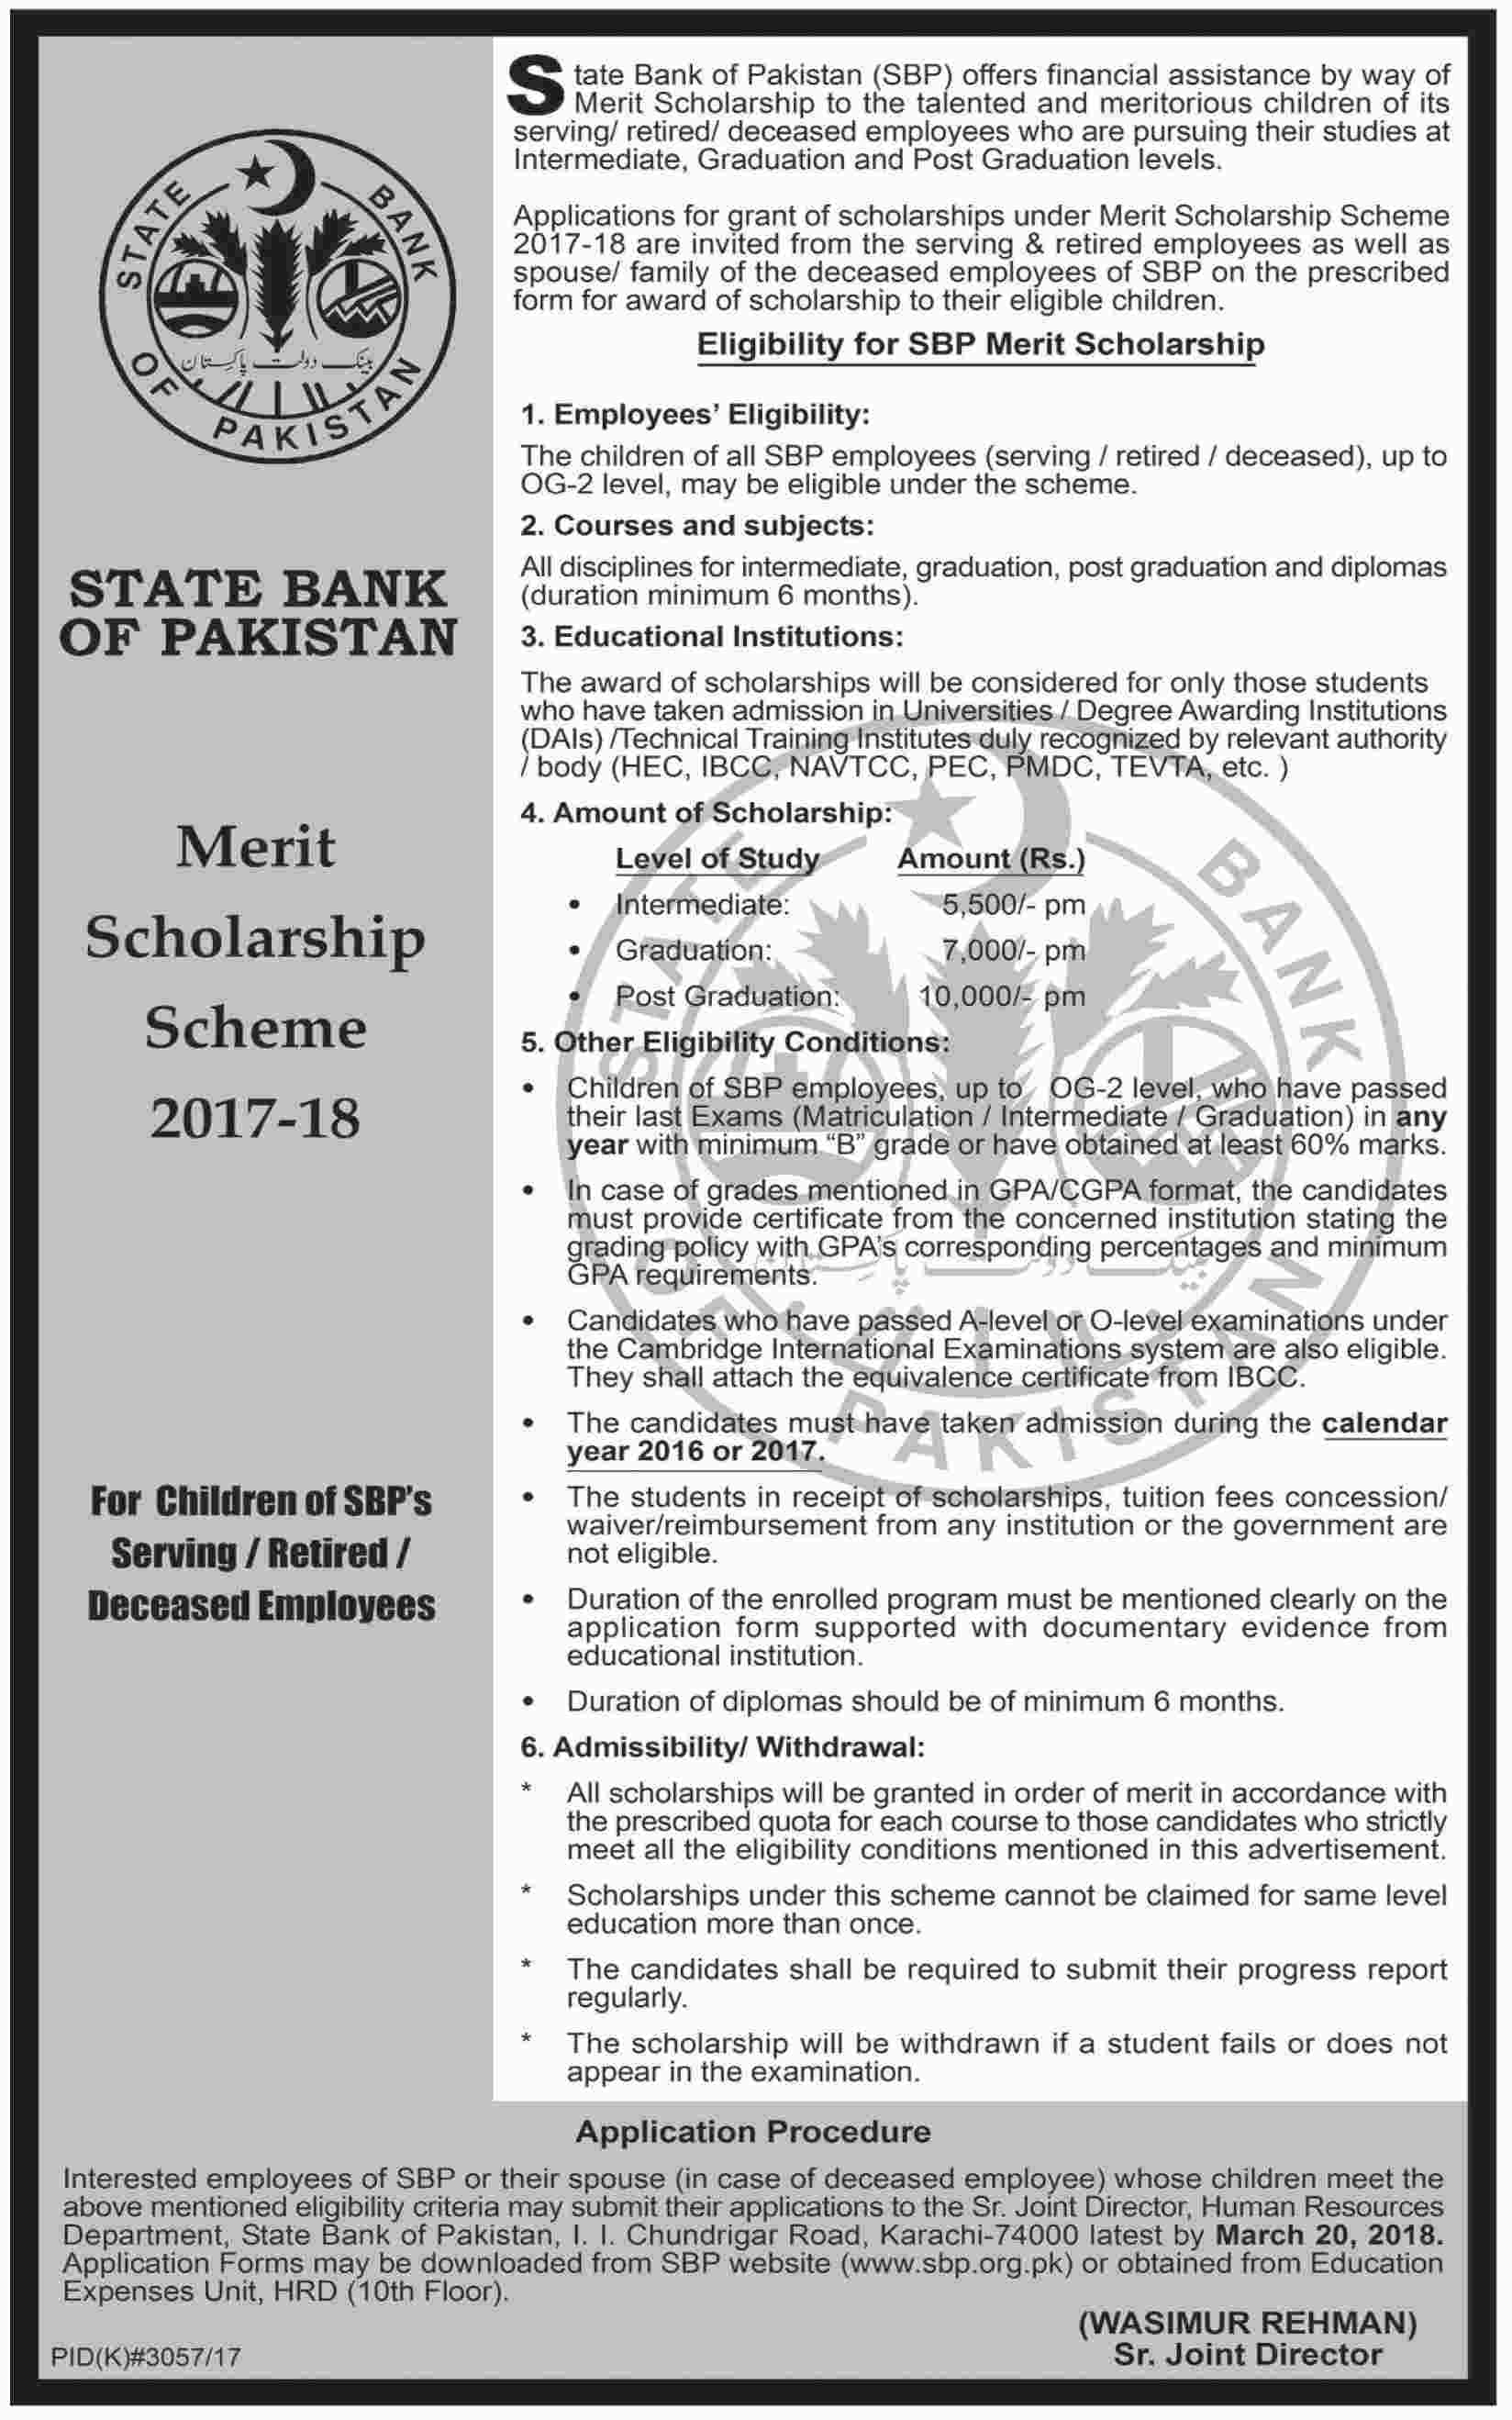 State Bank of Pakistan Merit Scholarship Scheme 2017-18